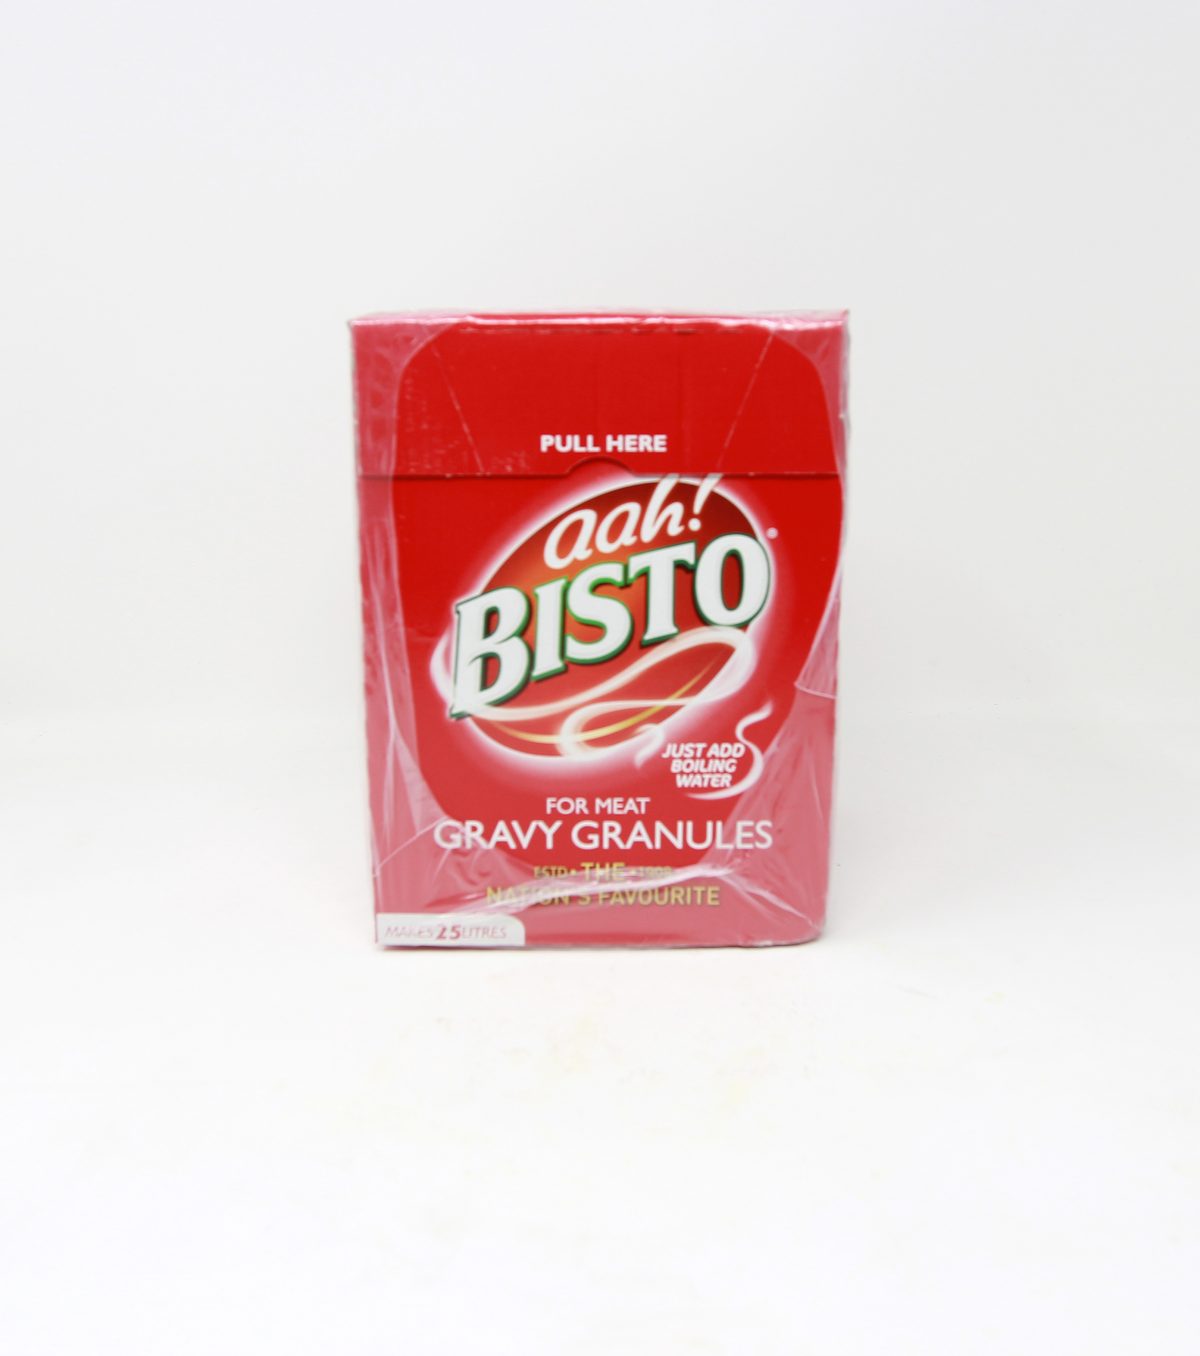 Bistro-Gravy-Granules